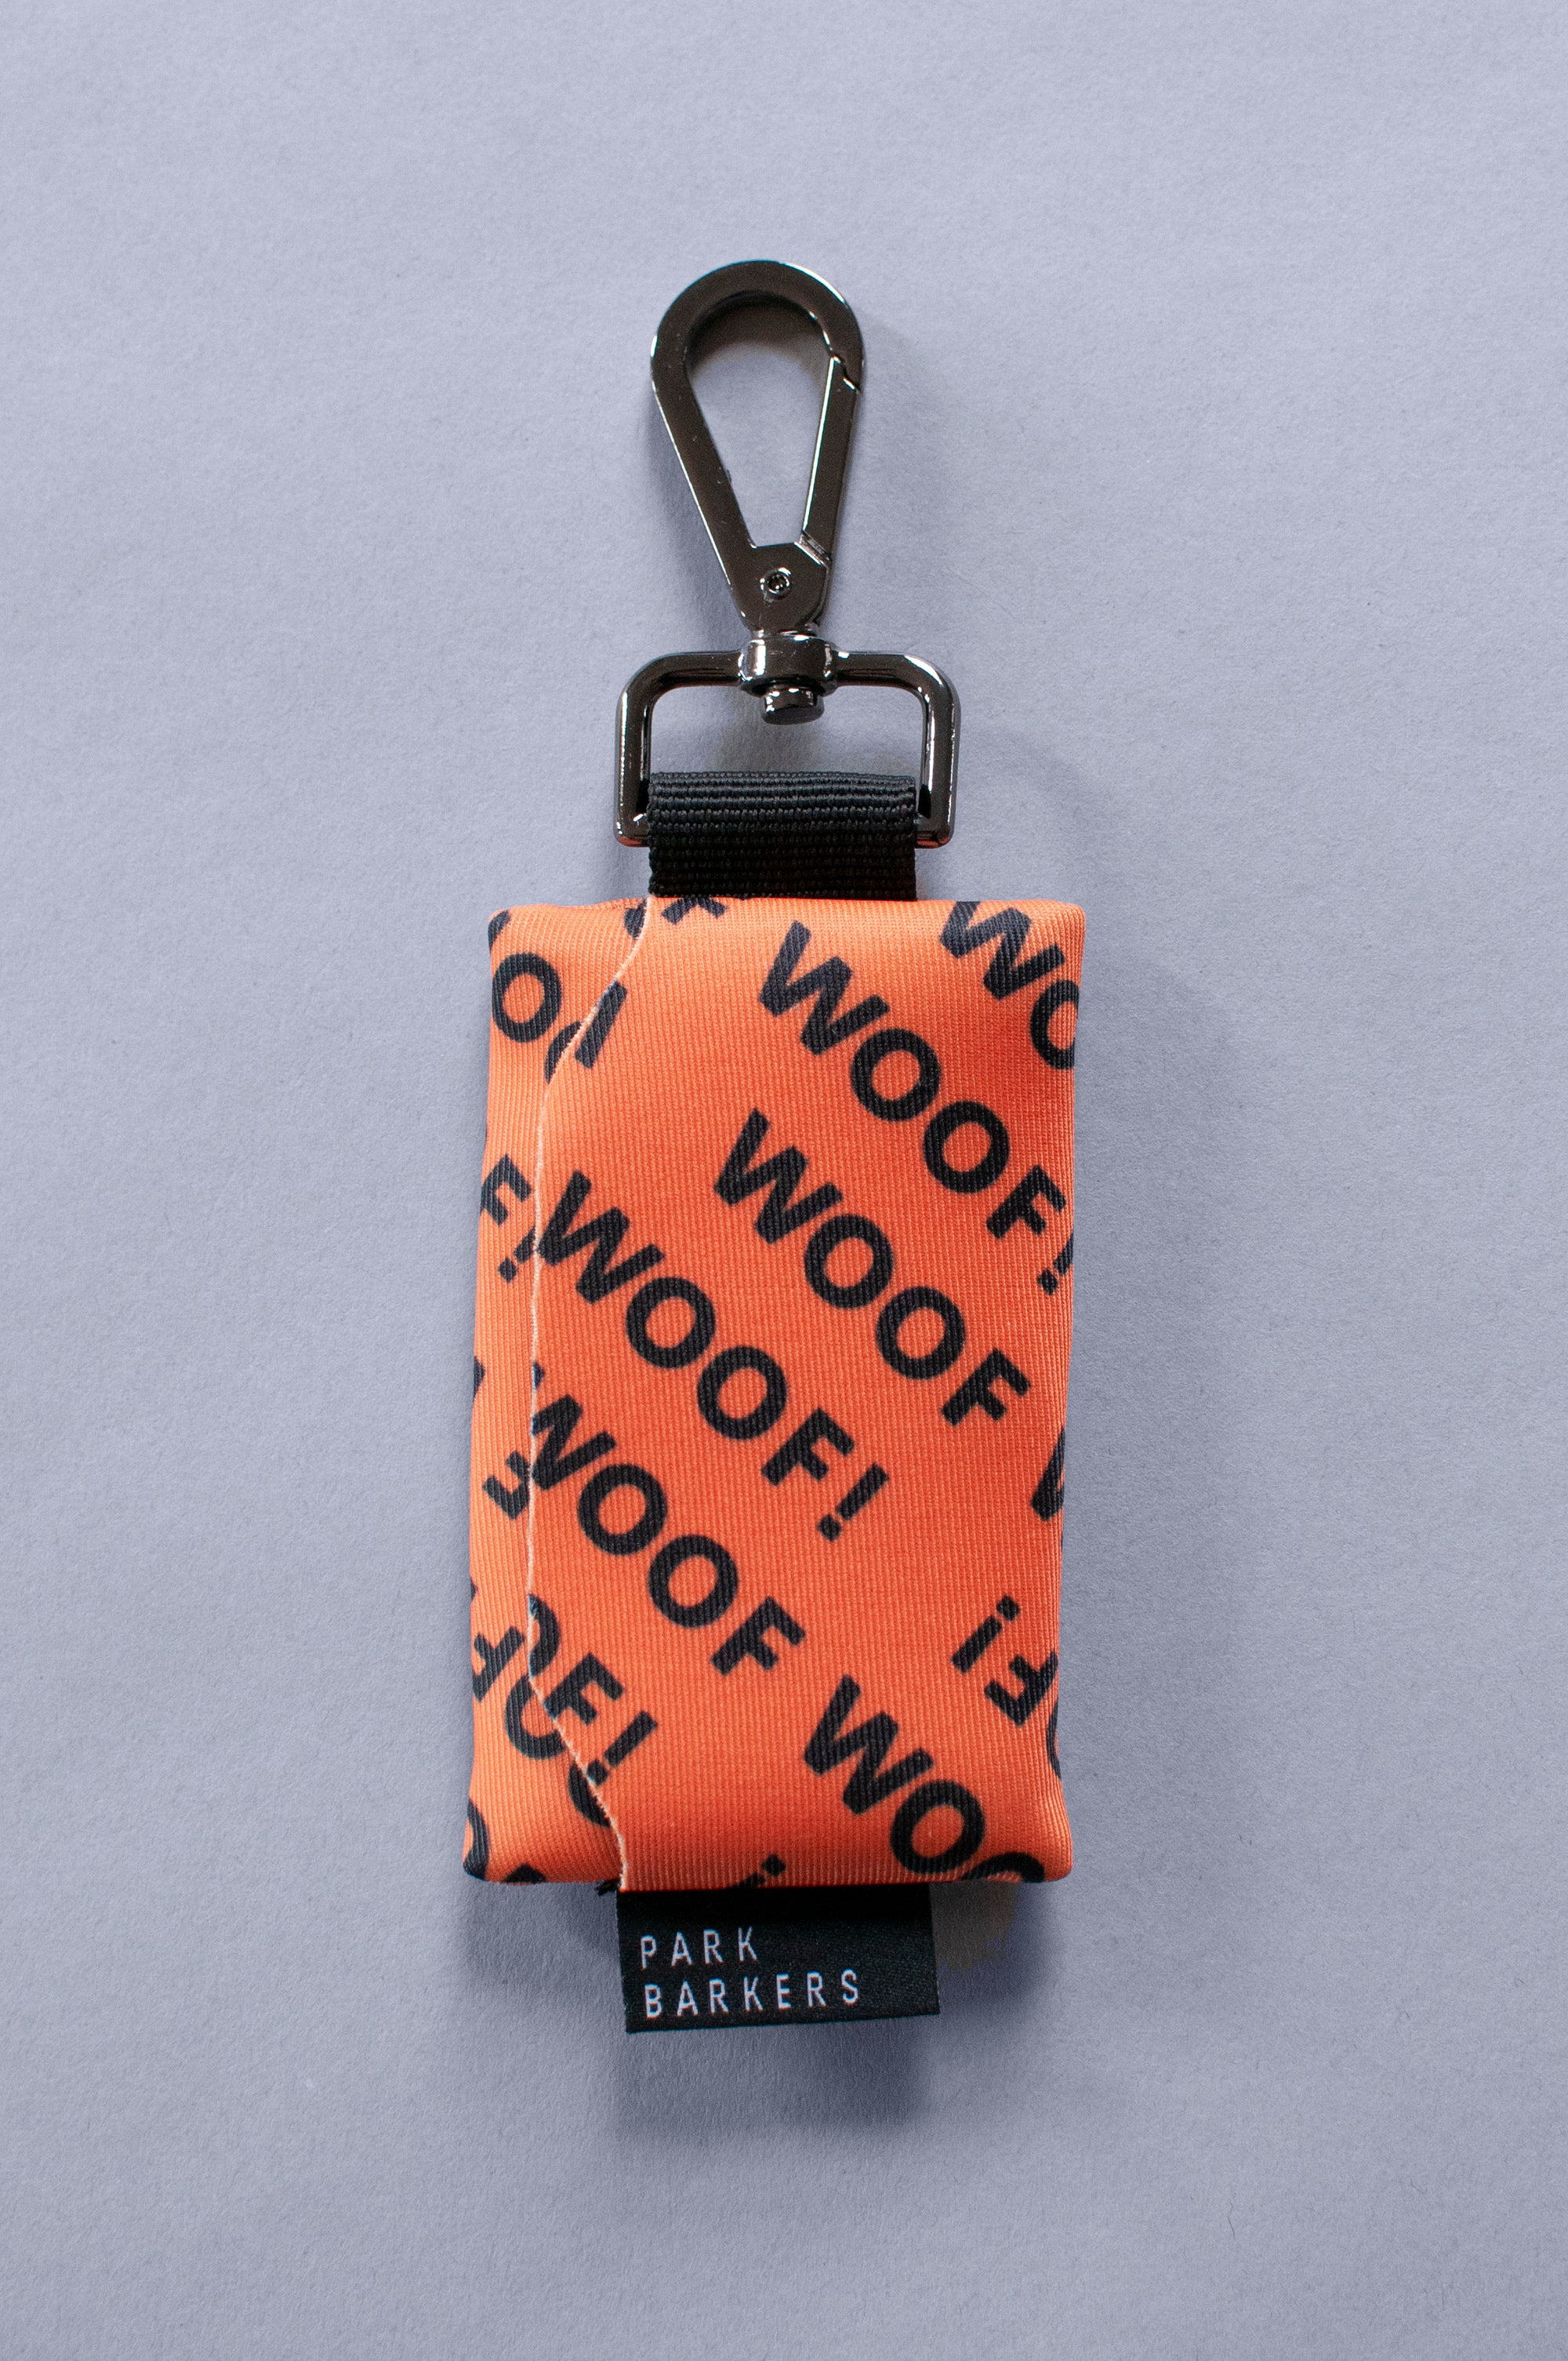 The Yoyogi waste bag holder - Woof Woof! Print